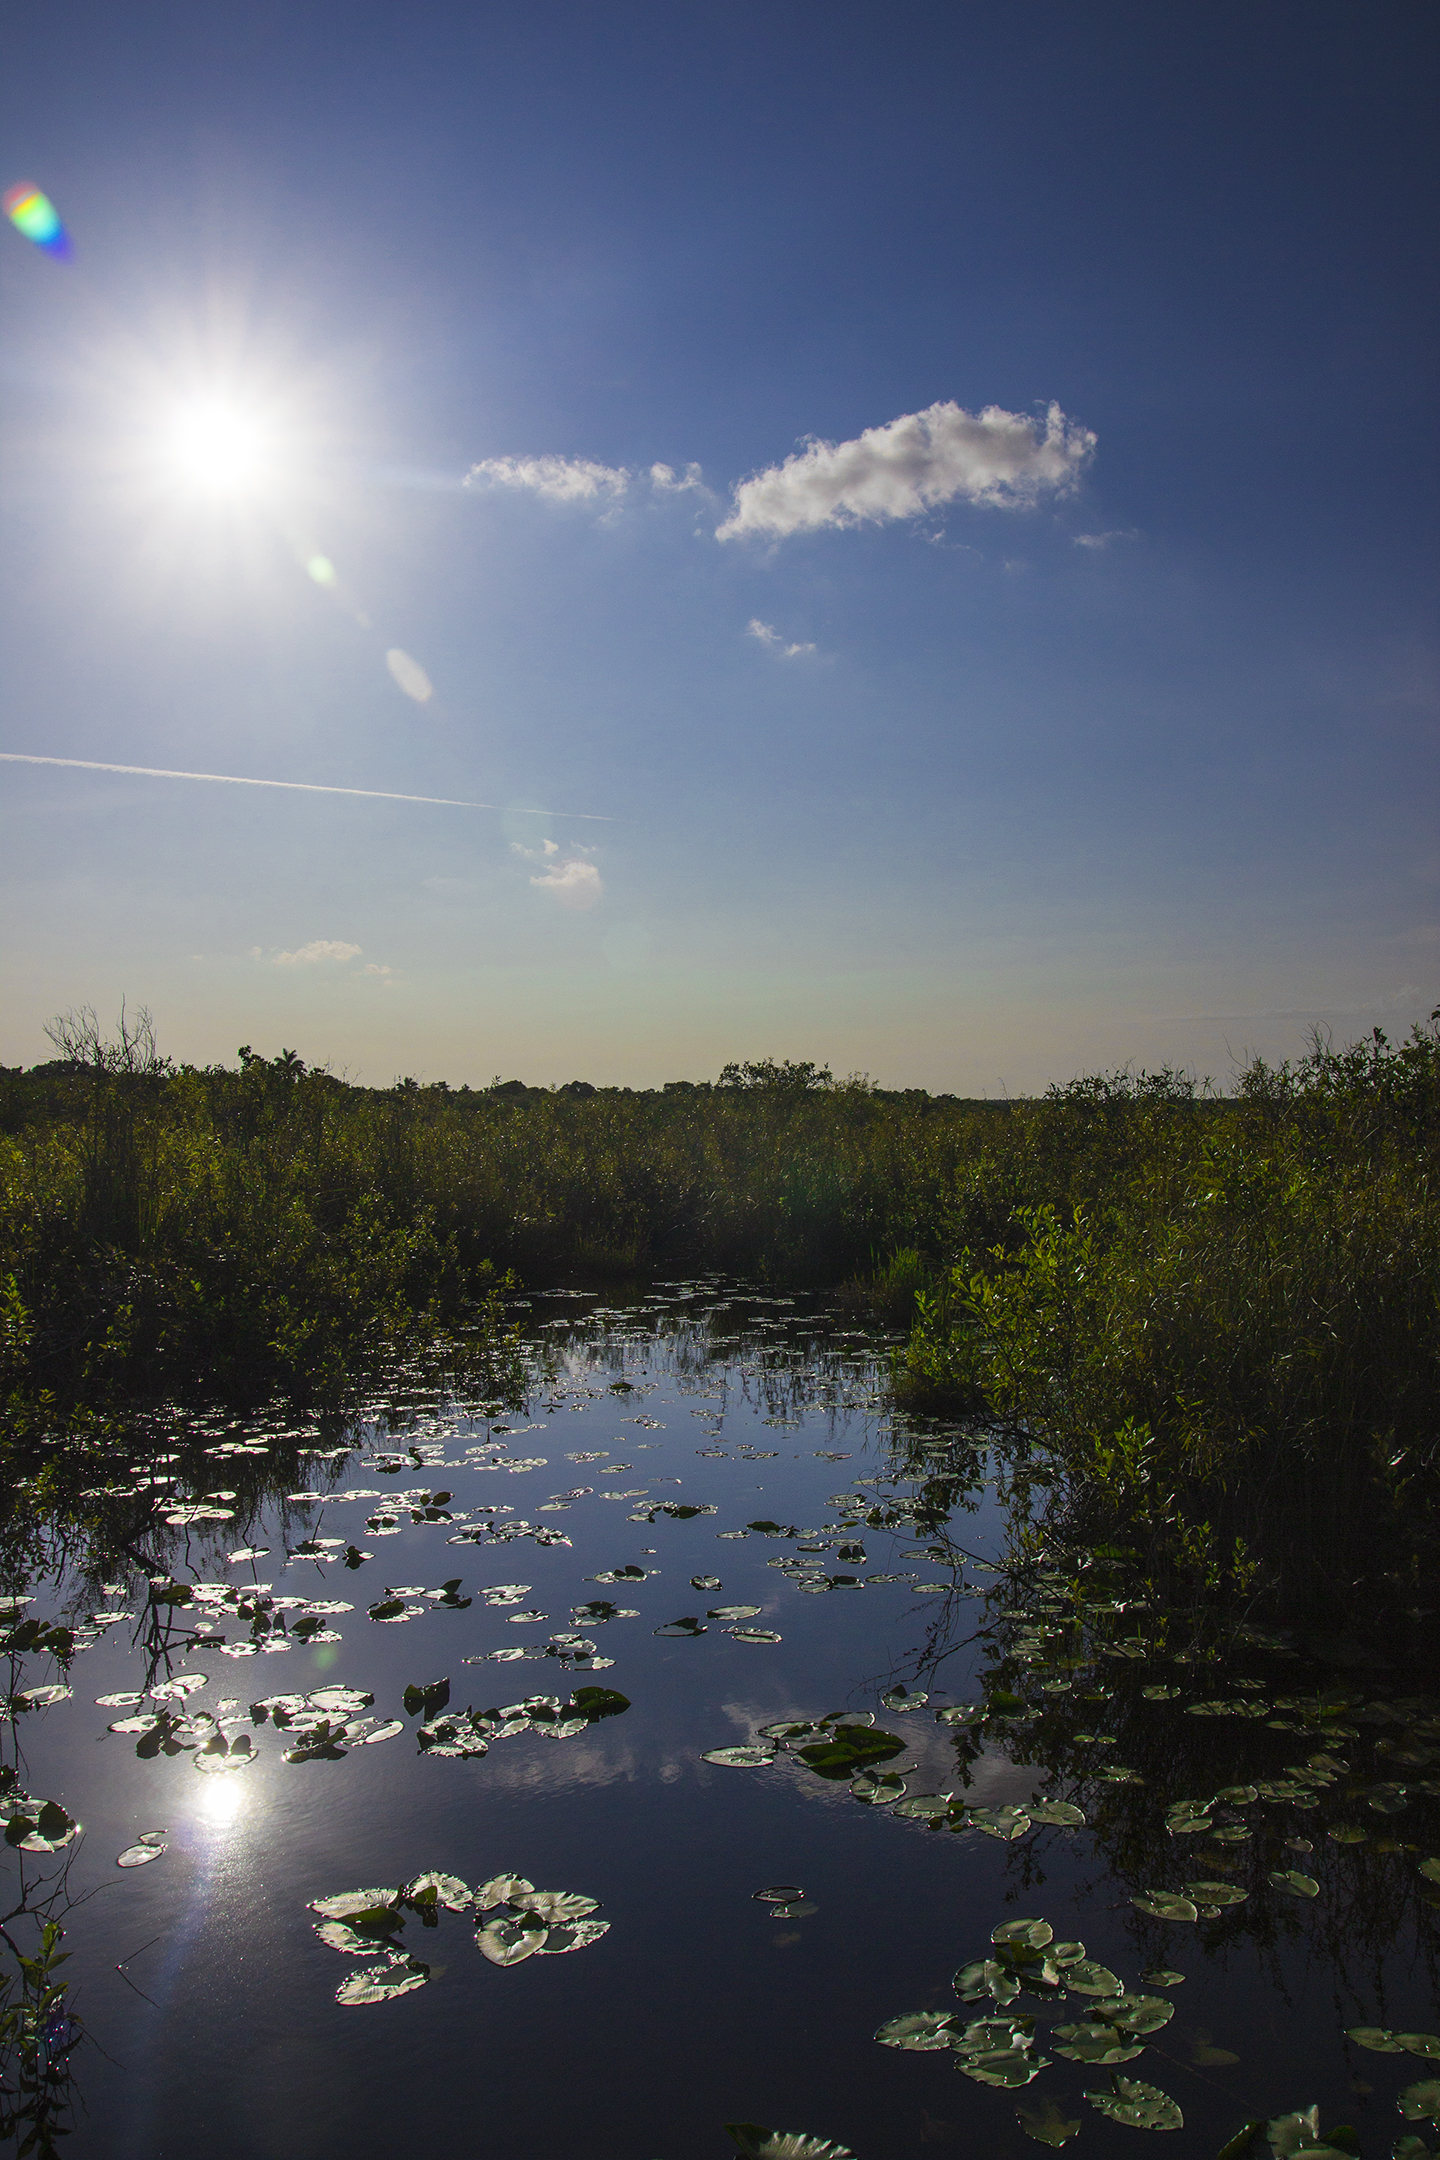 Everglades landscape